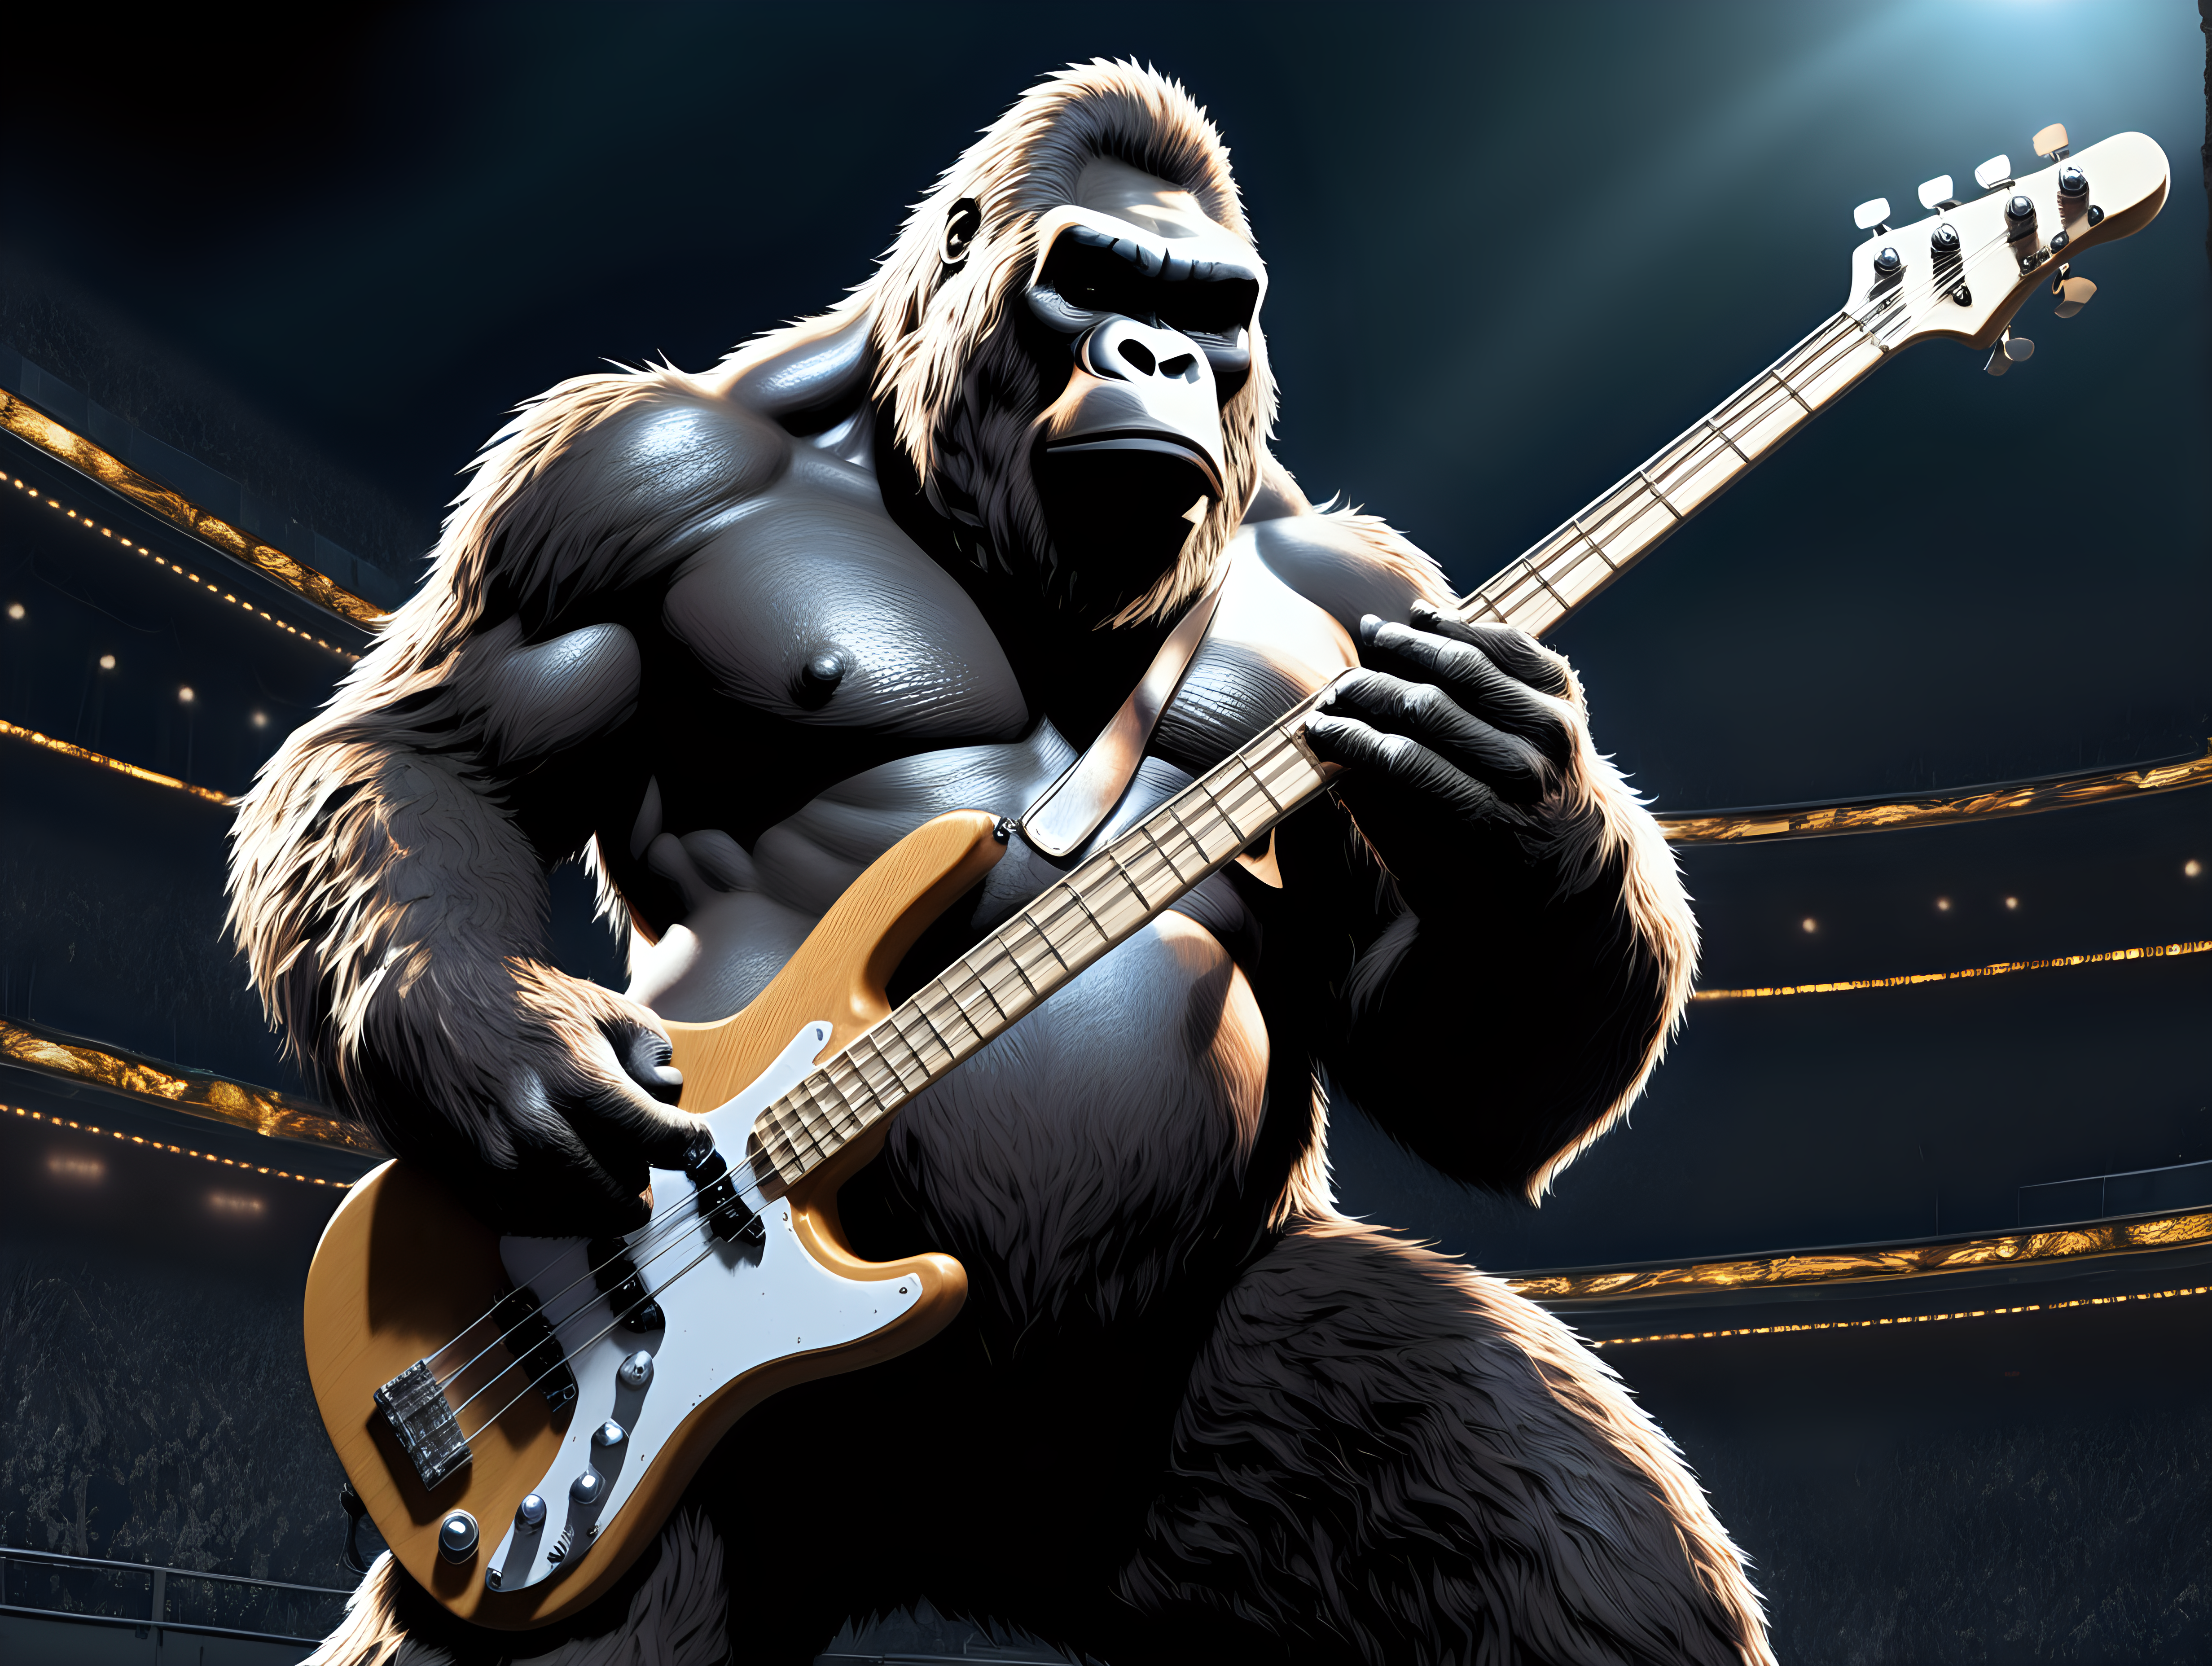 King Kong playing bass guitar in an arena at night